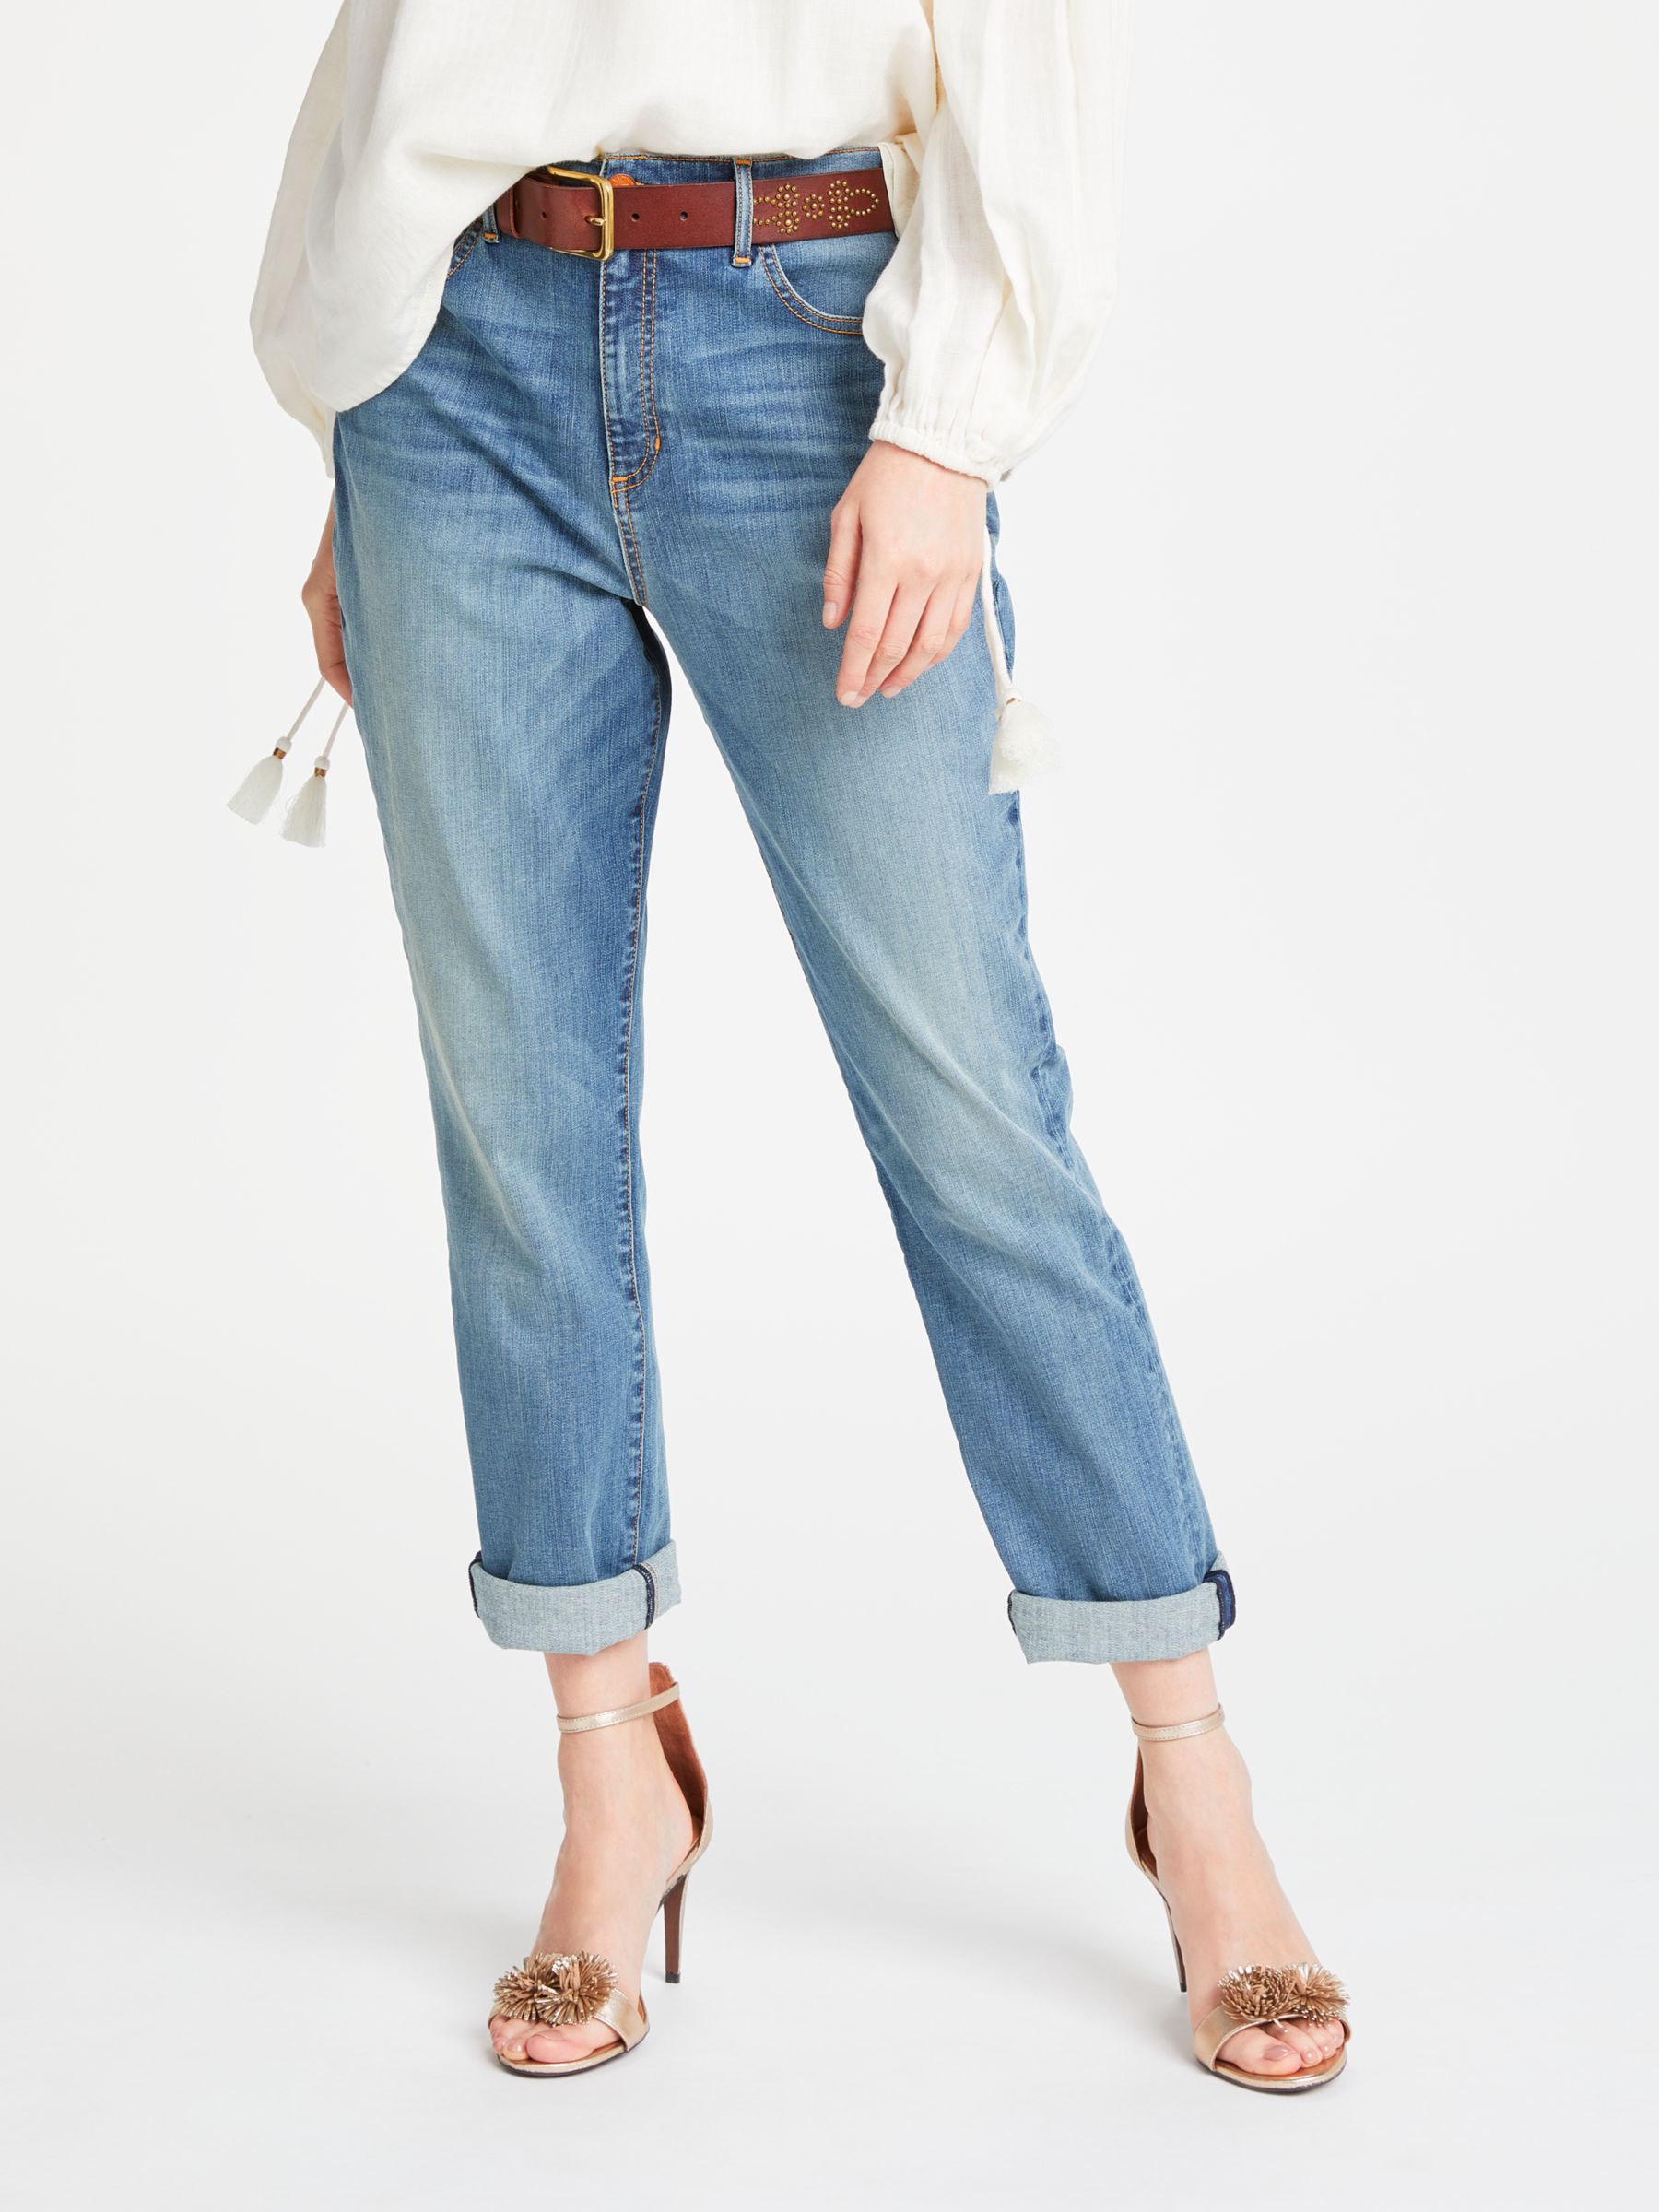 parallel jeans online